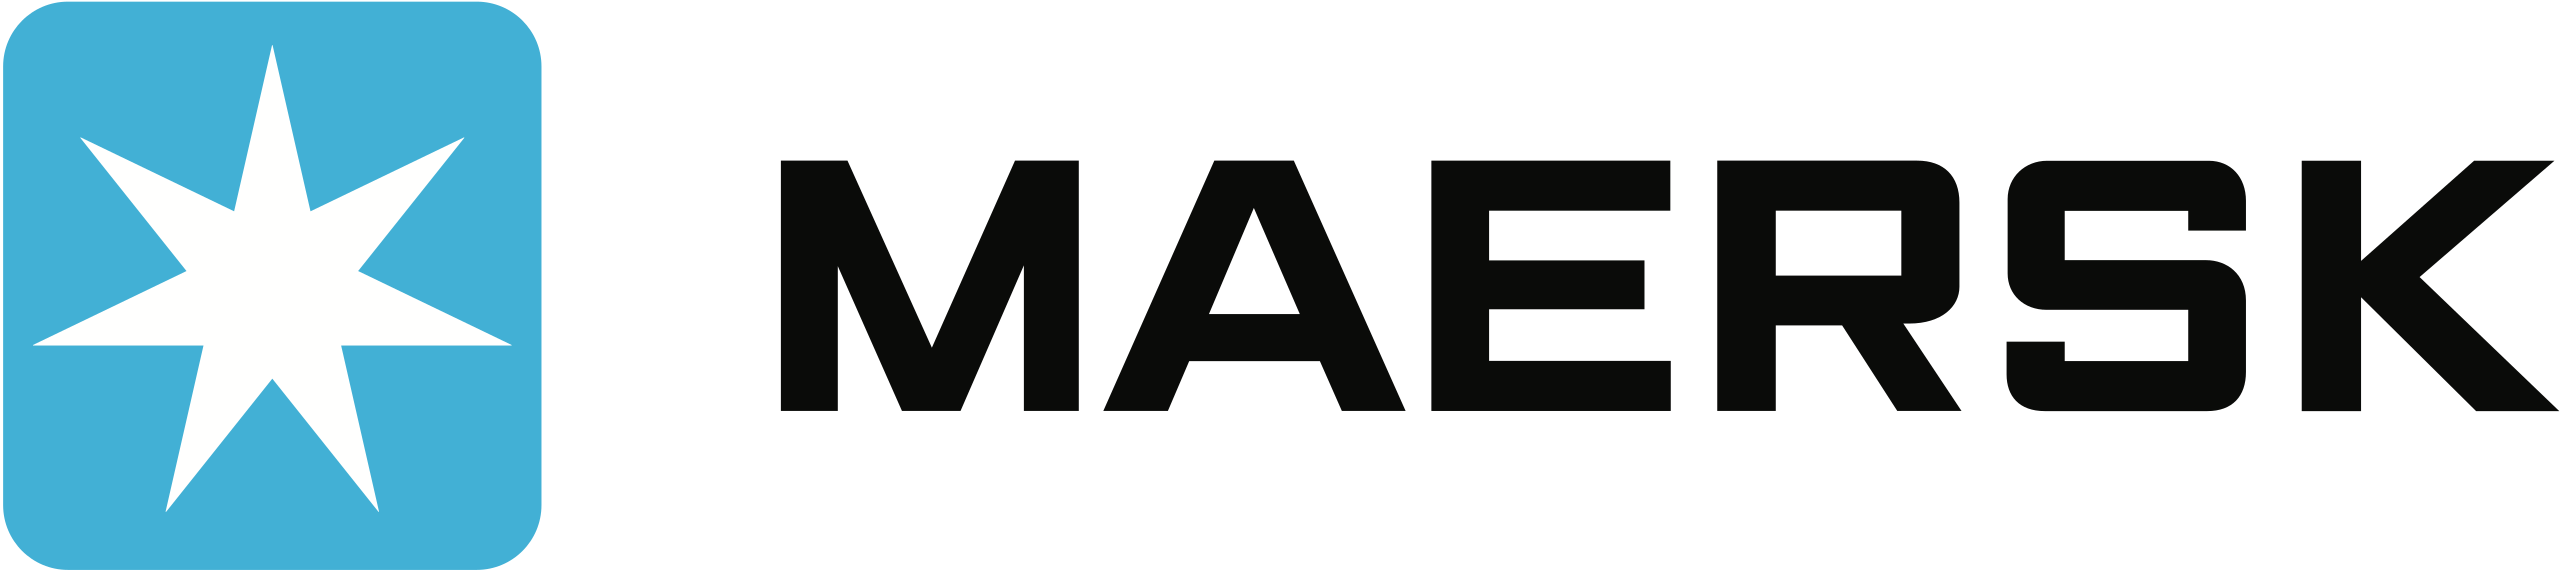 Maersk Group logo